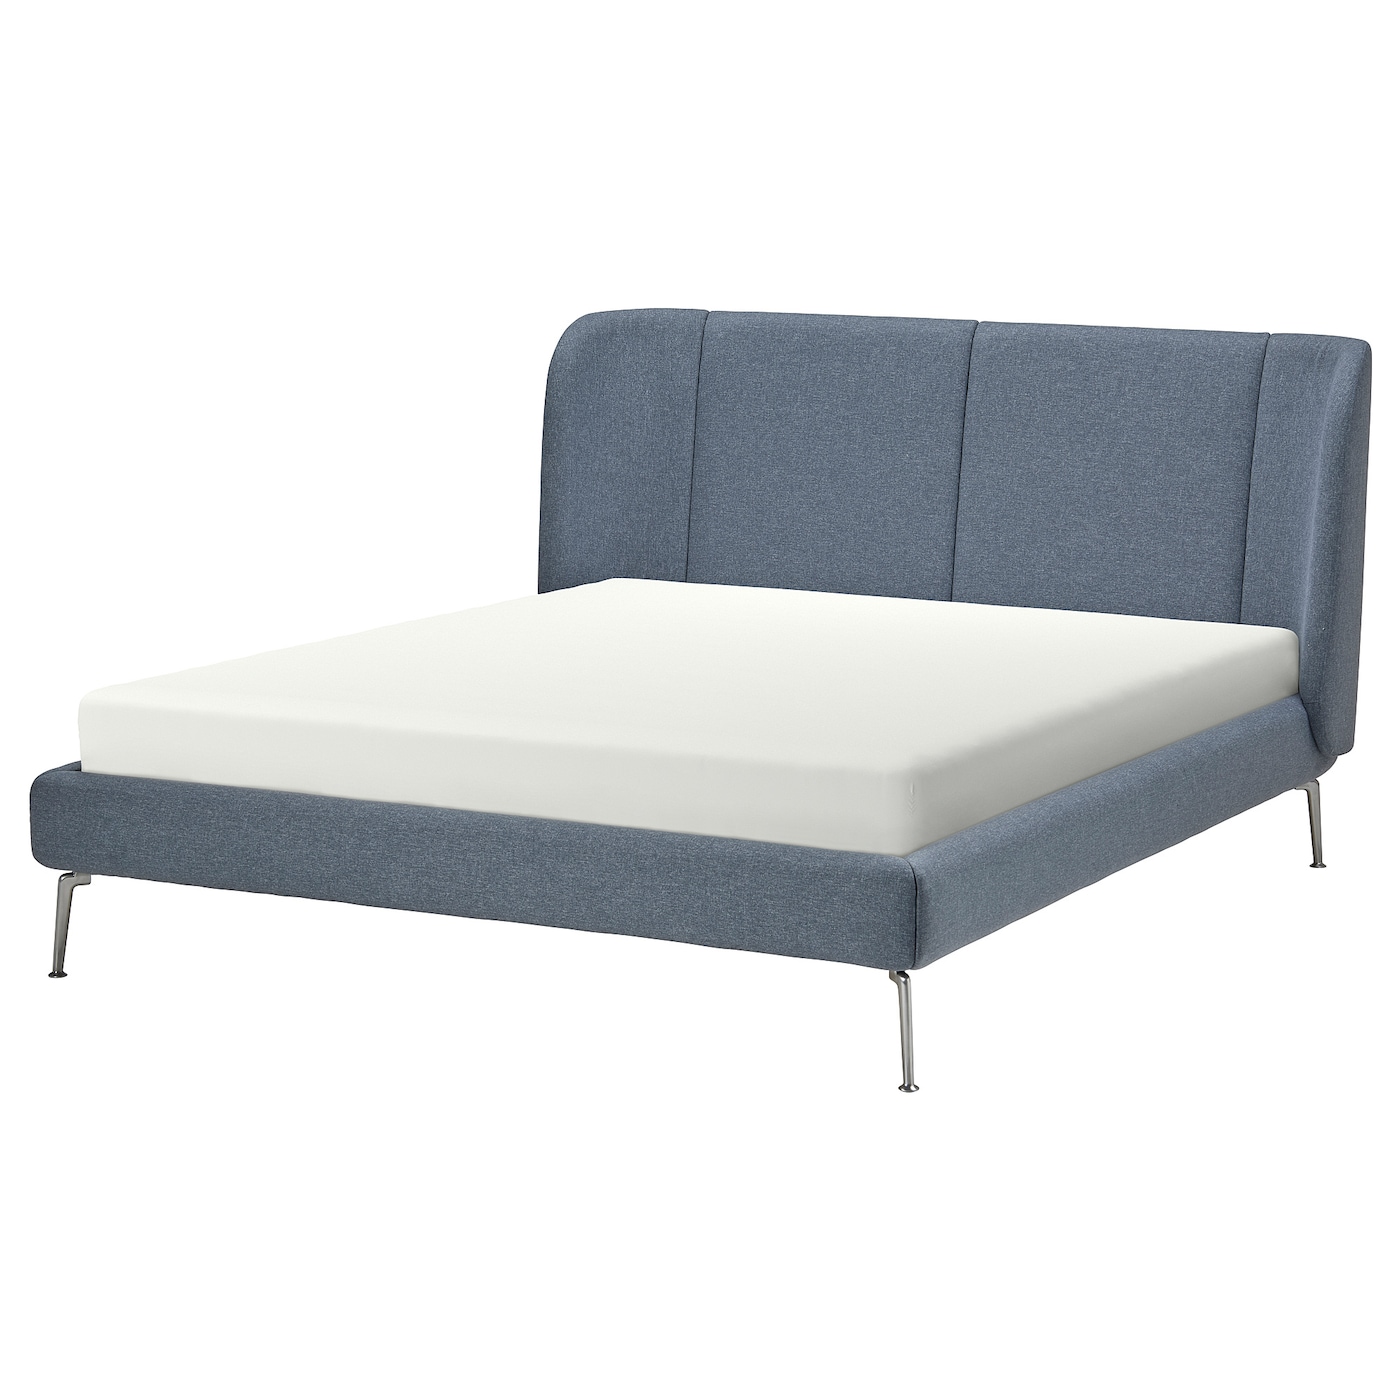 TUFJORD - tapicerowana rama łóżka gunnared niebieski